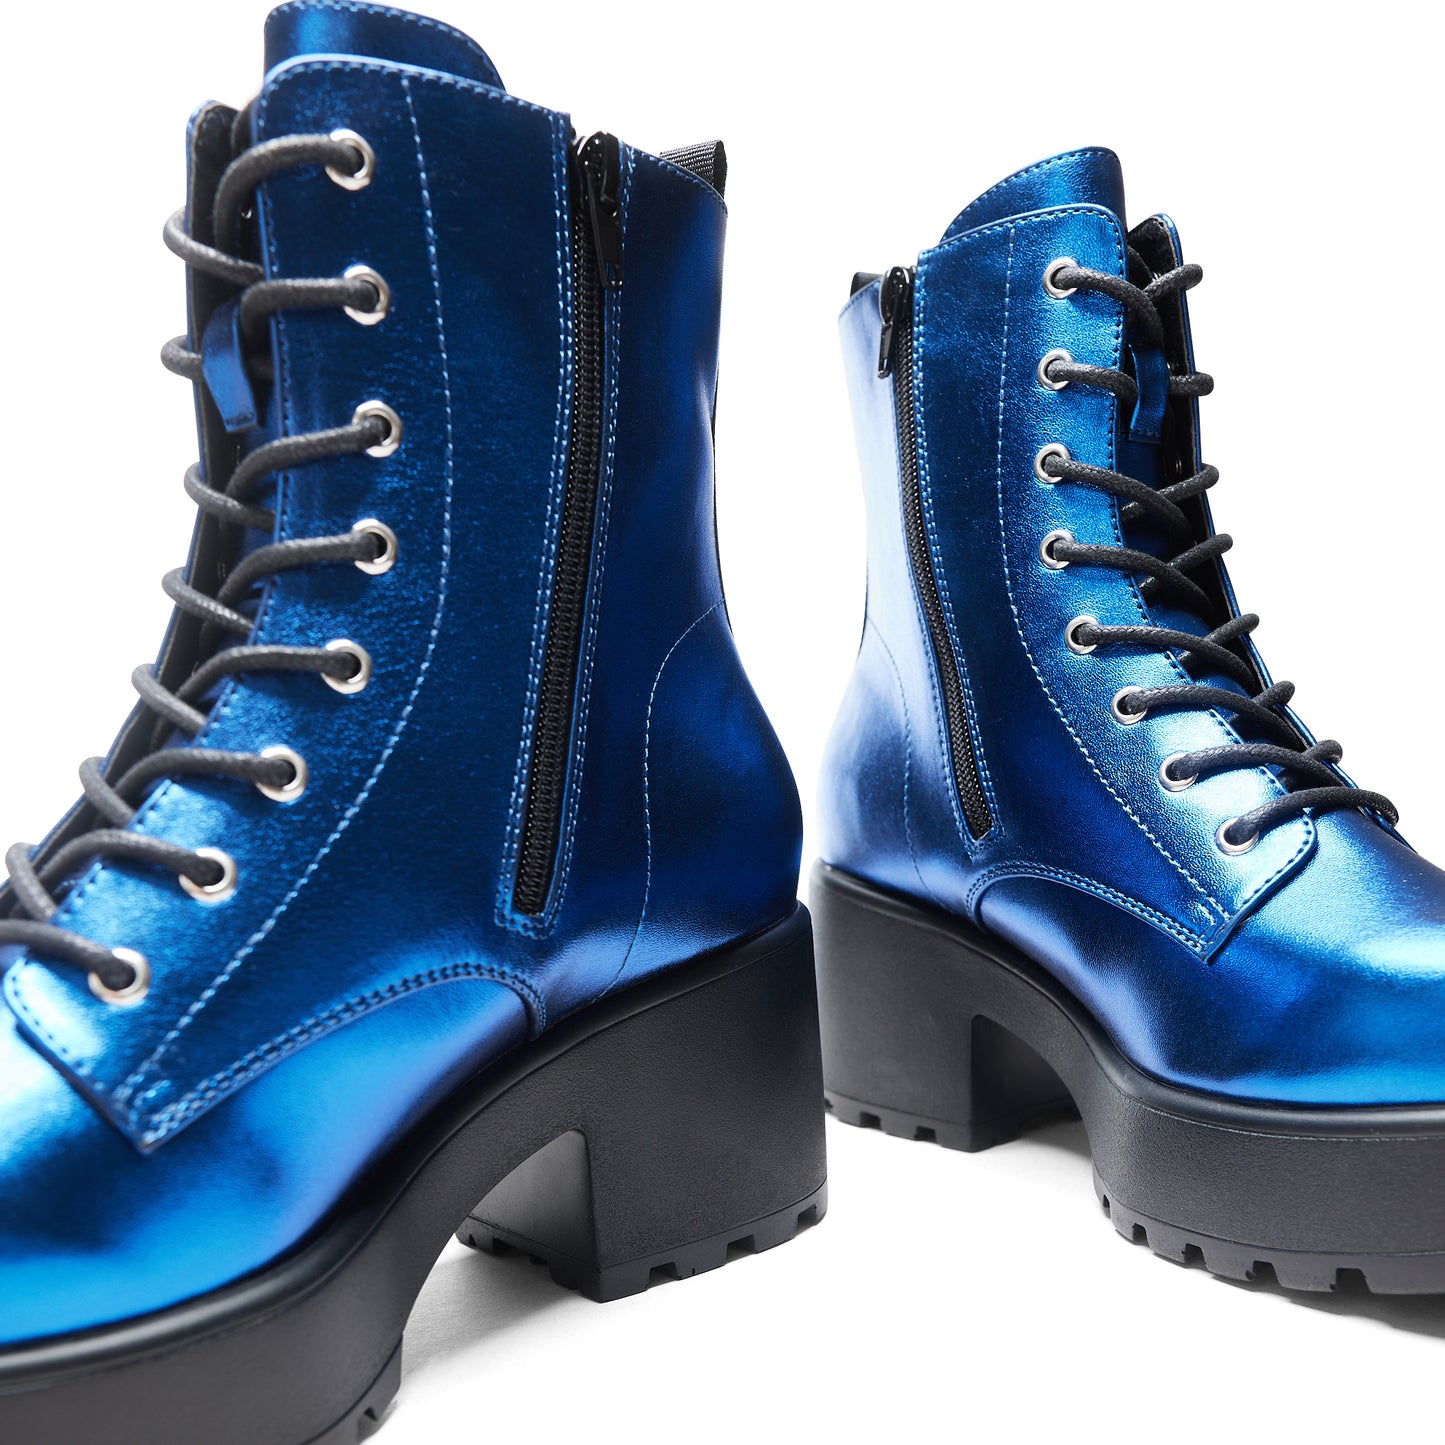 Cobalt Haze Military Platform Boots - Ankle Boots - KOI Footwear - Blue - Front View